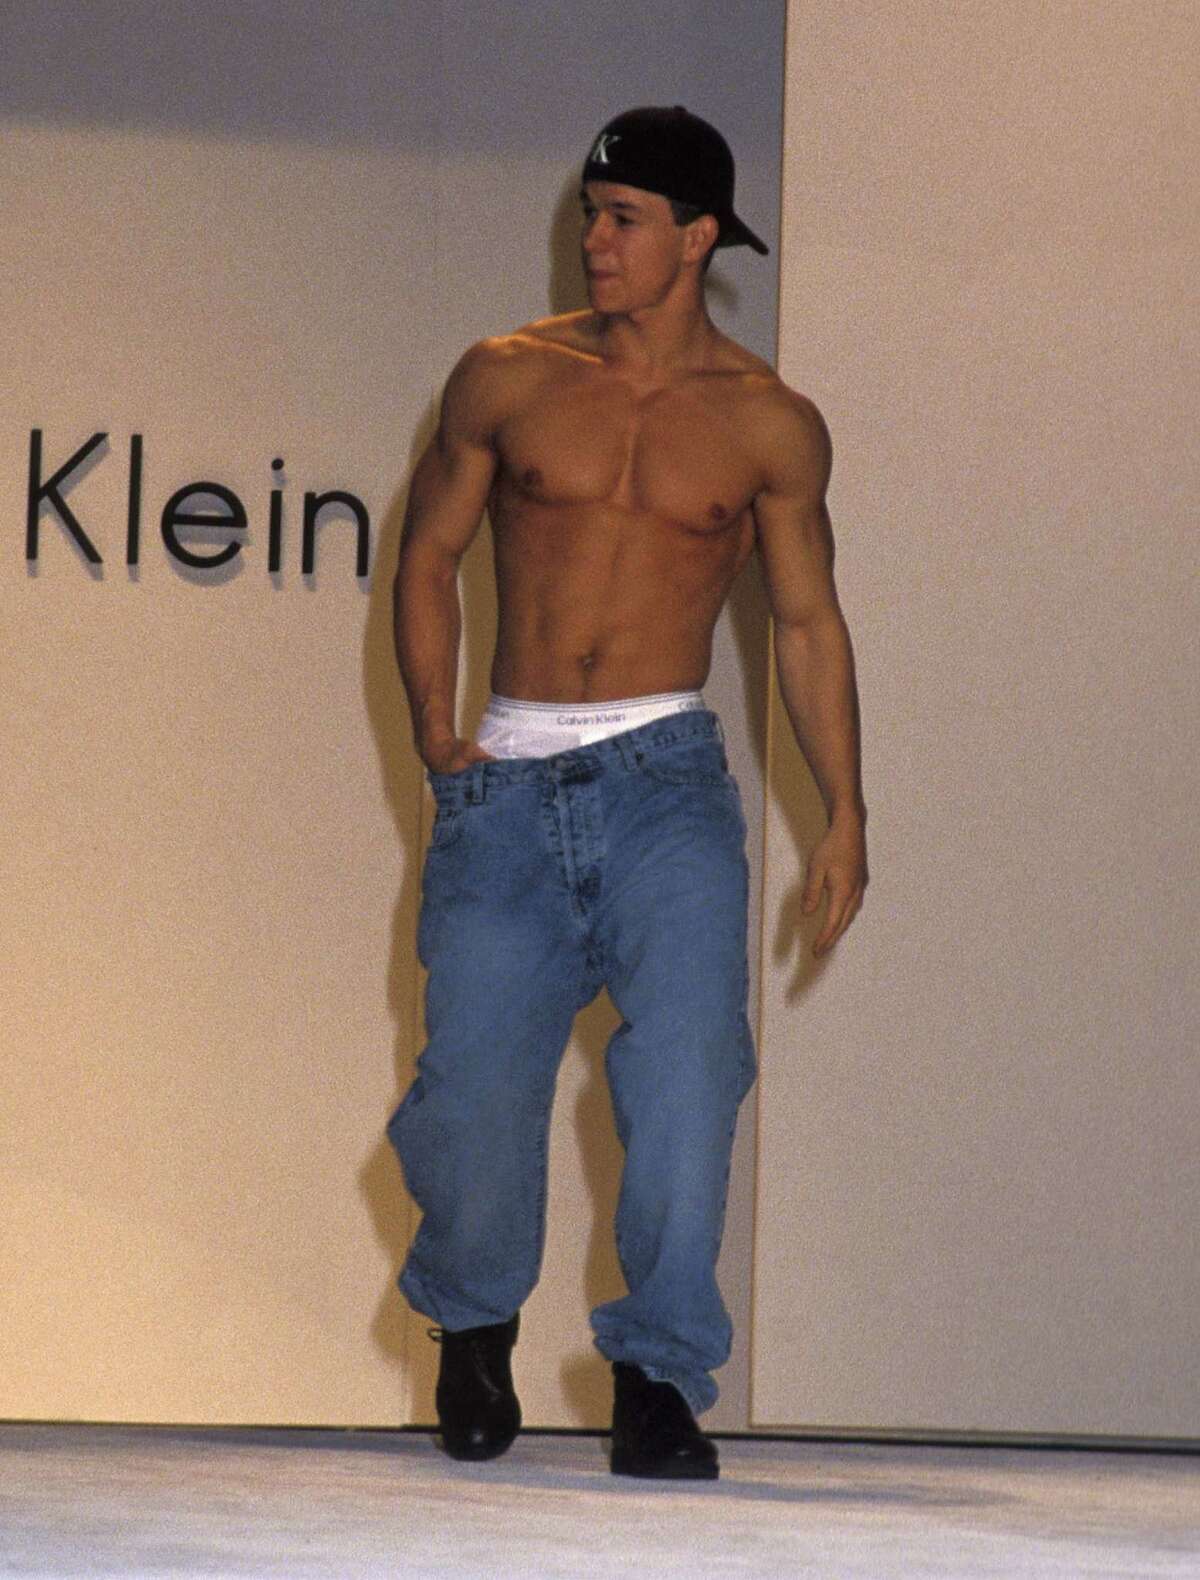 Calvin Klein models through the years